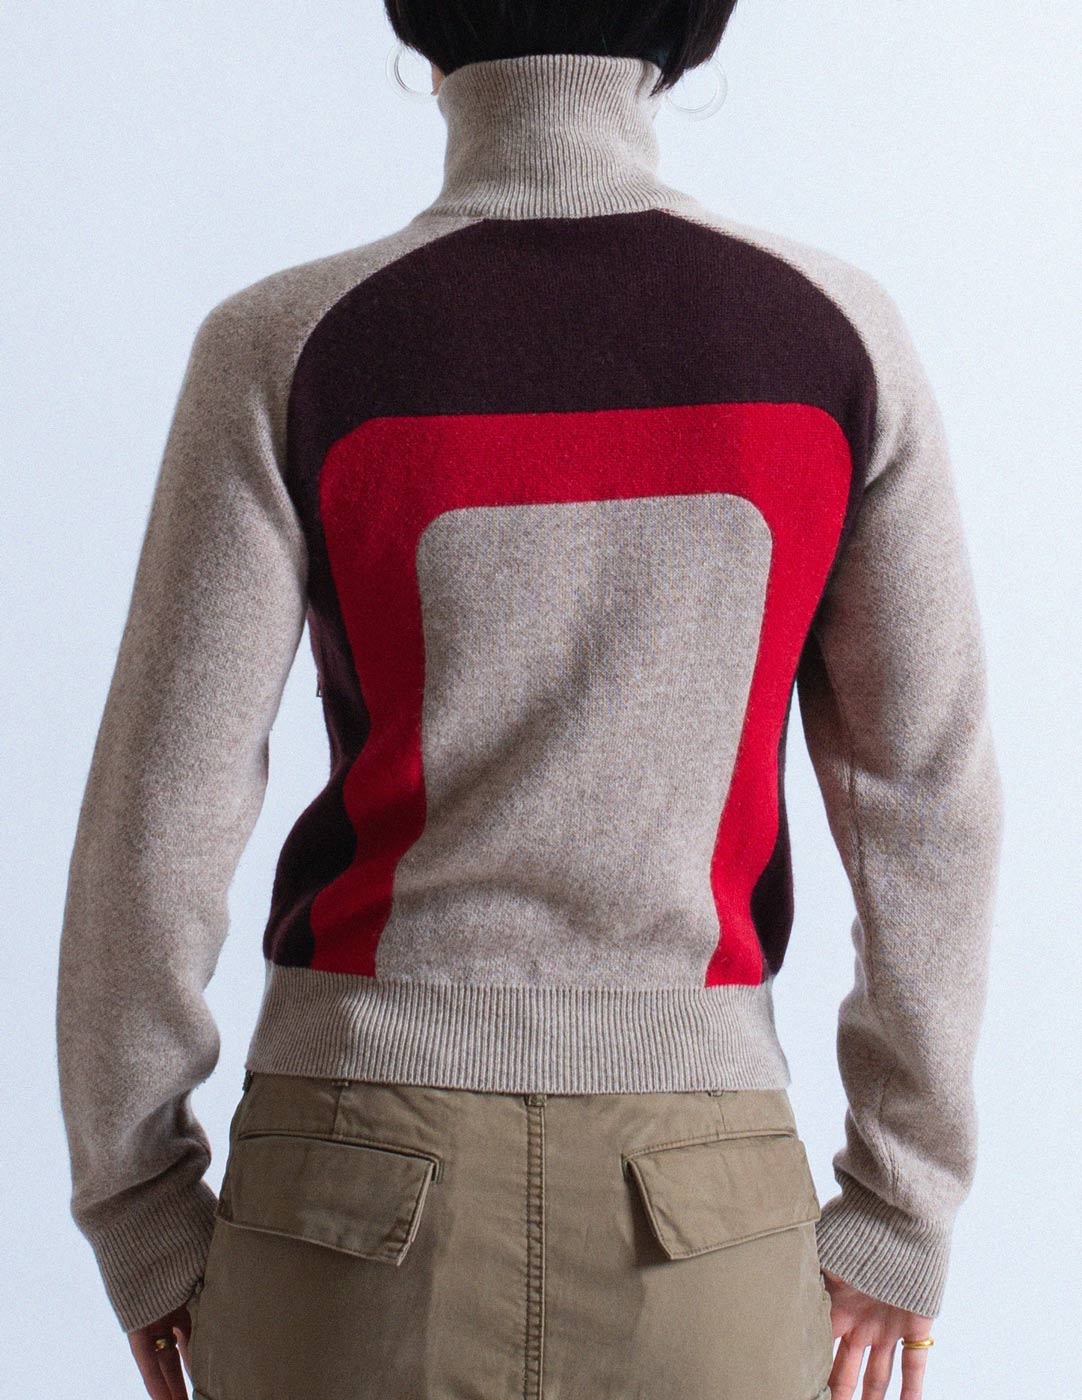 Prada zipped wool and cashmere cardigan back detail